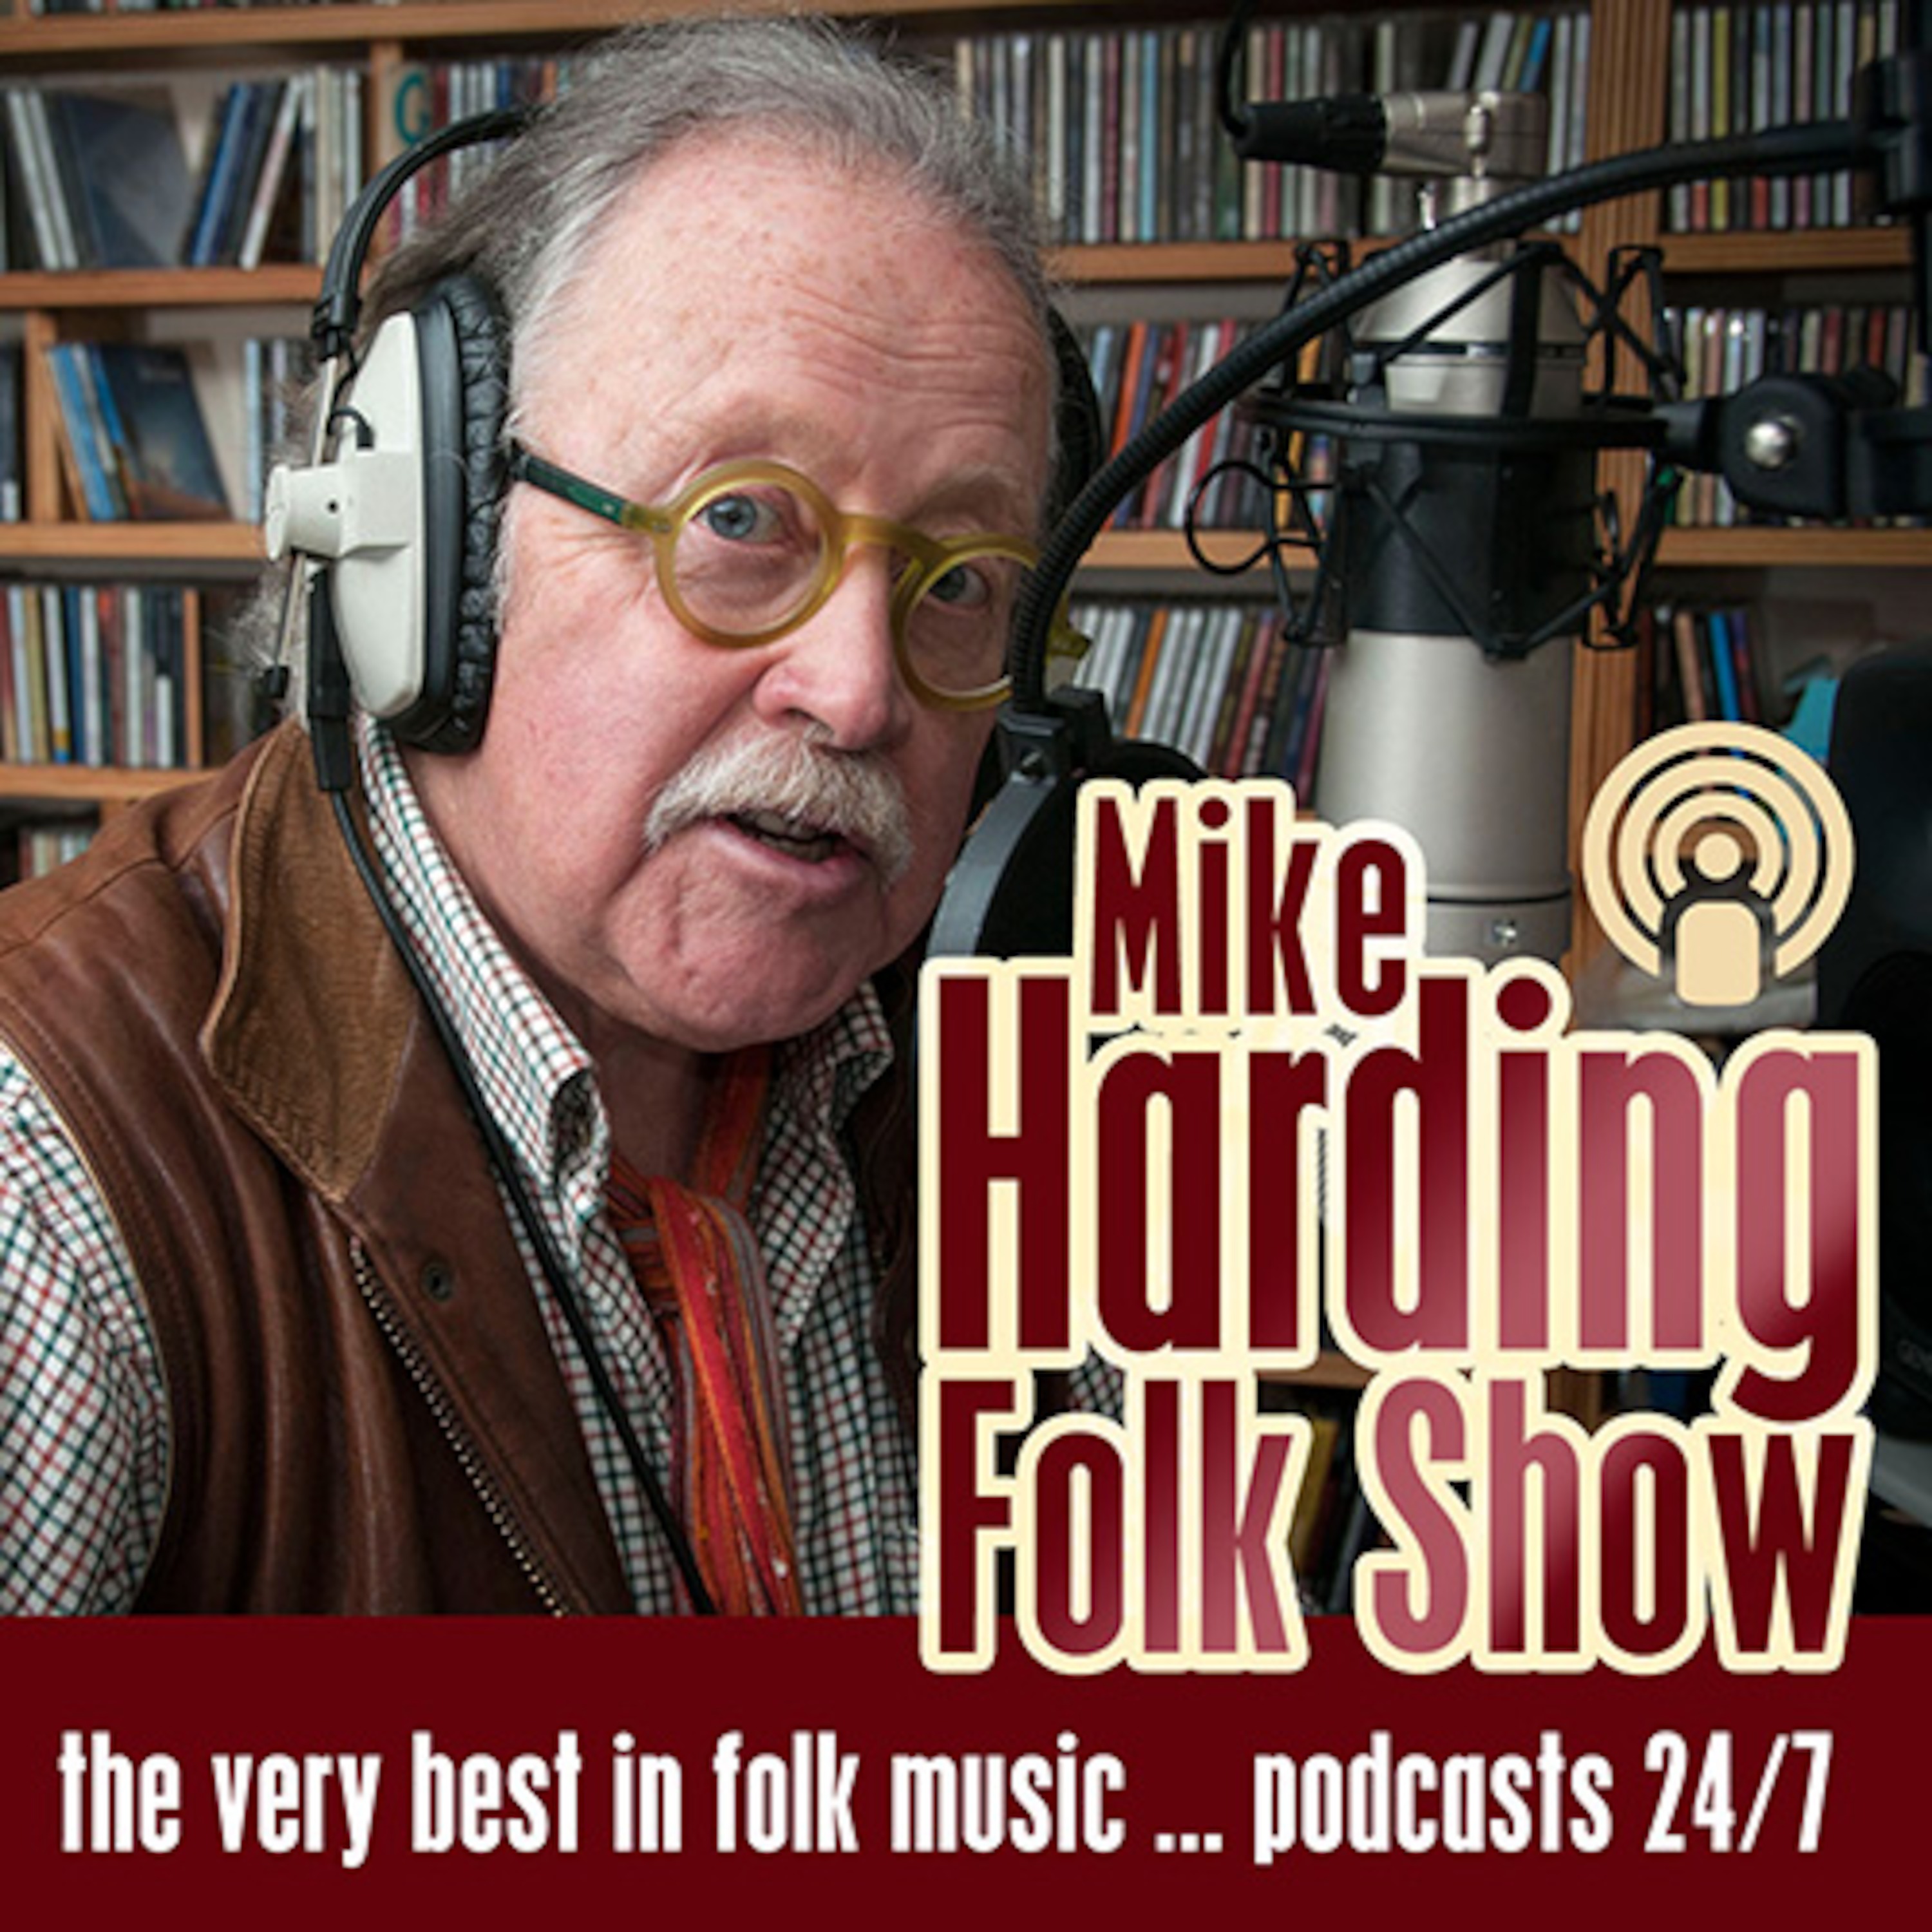 Mike Harding Folk Show 233